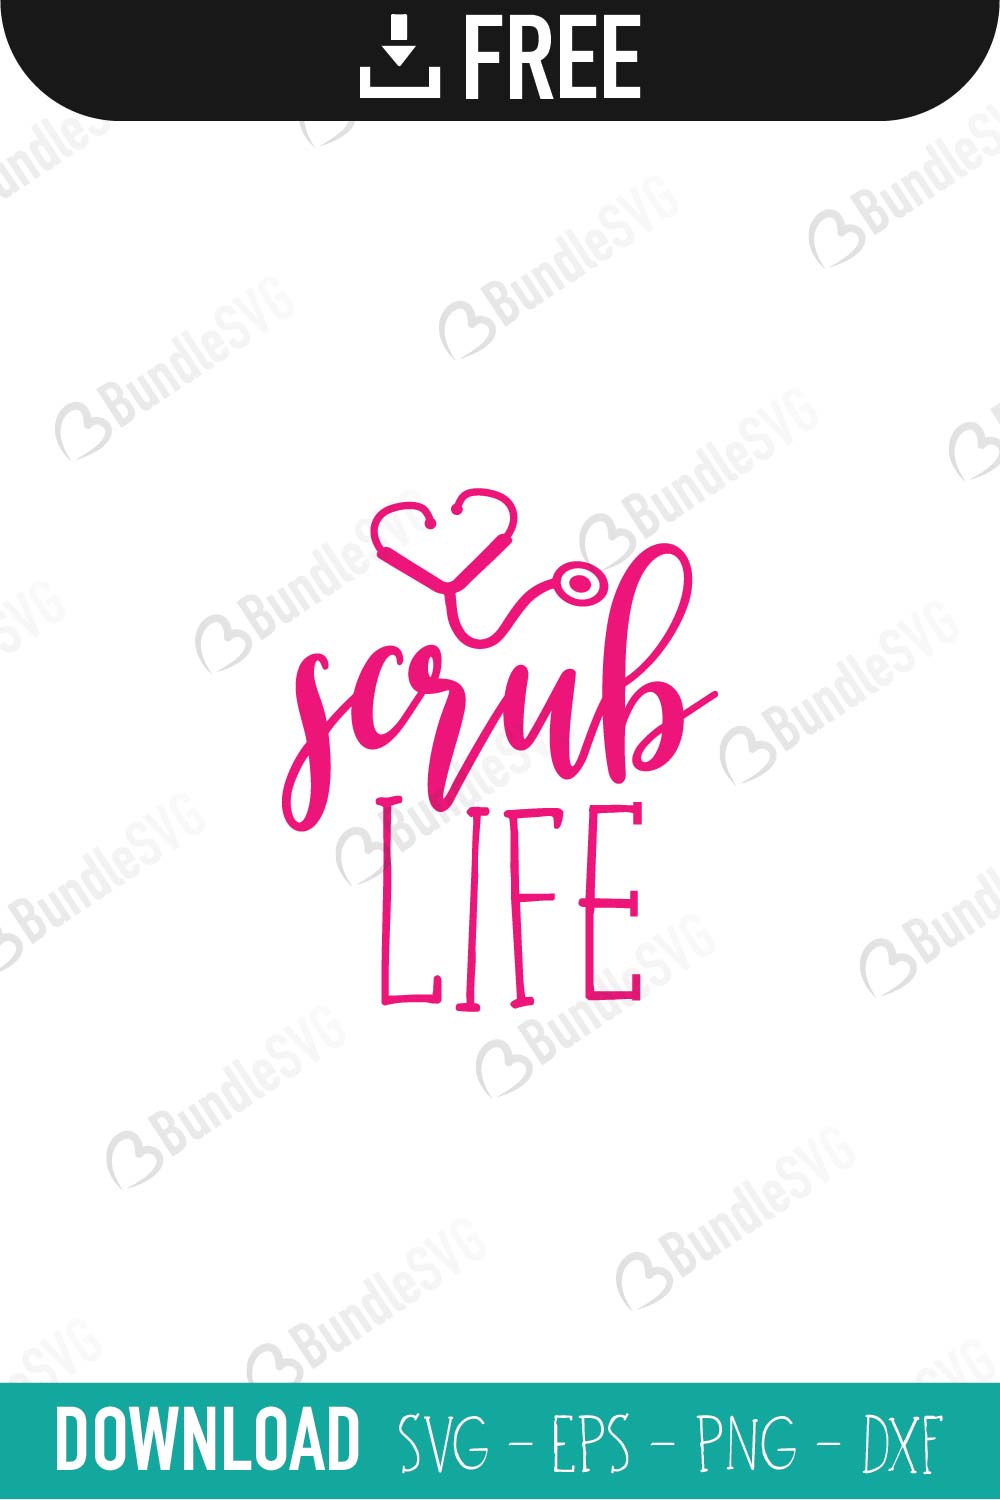 Scrub Life SVG Cut Files Free Download | BundleSVG